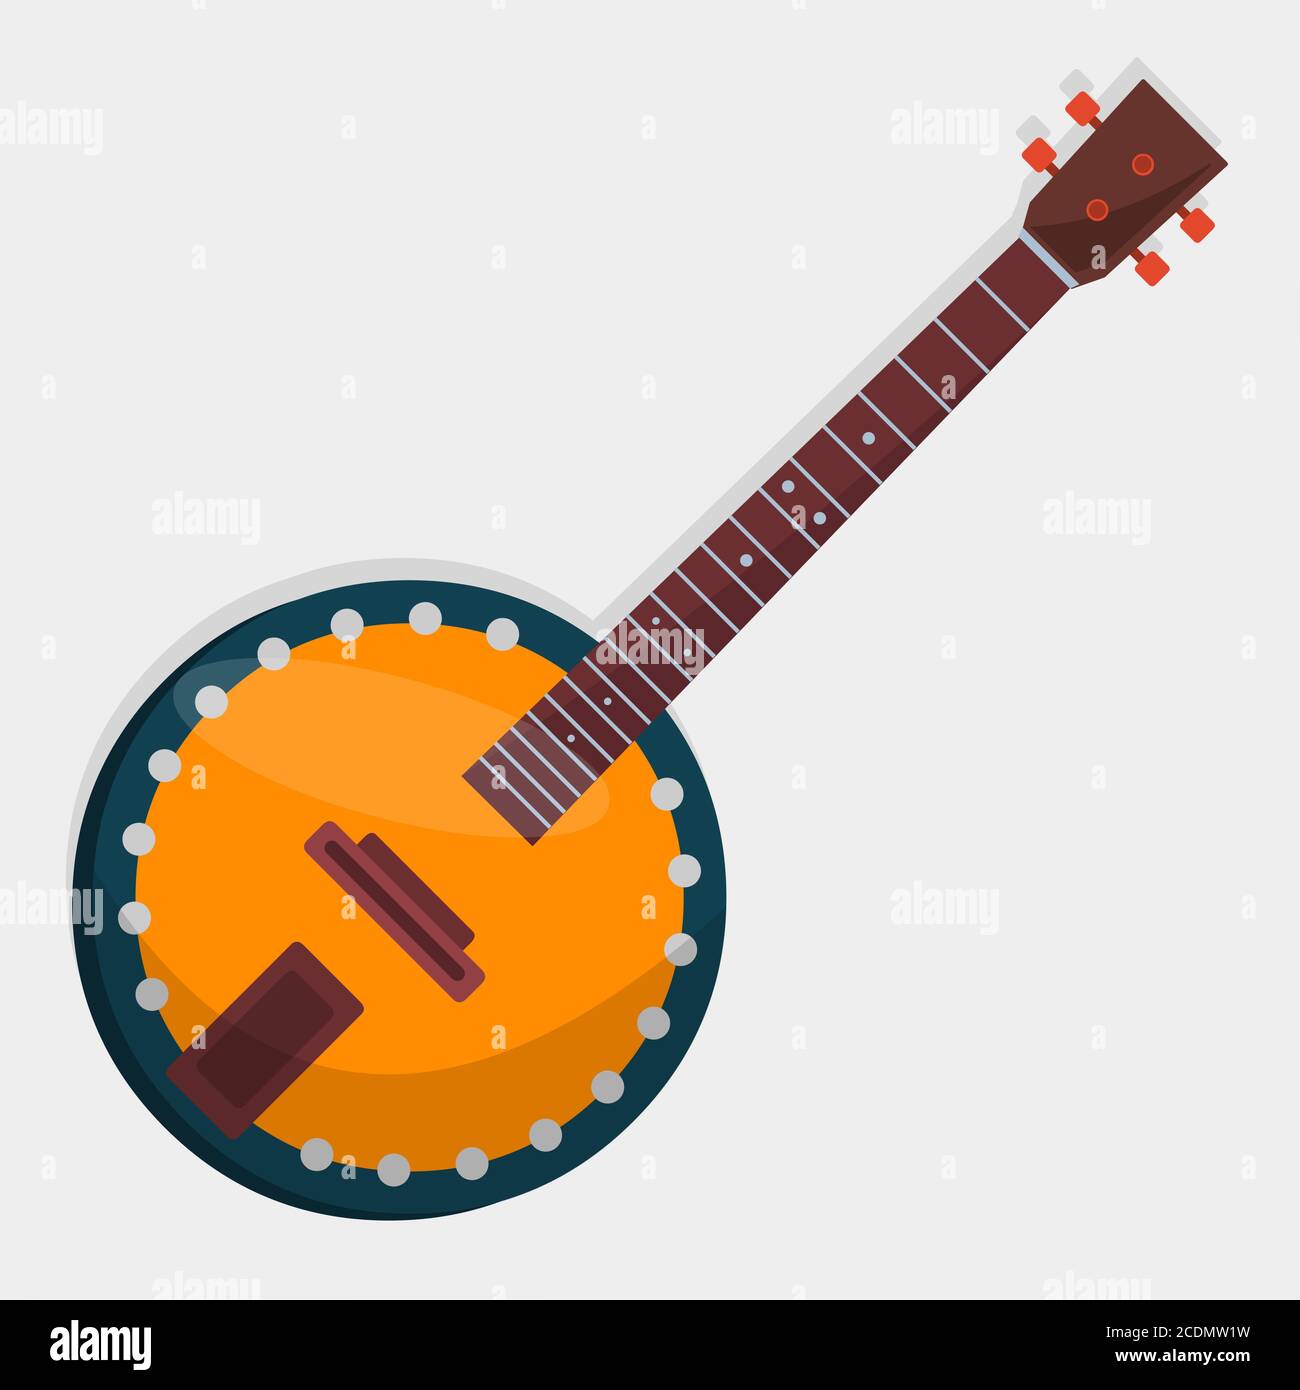 banjo music instrument vector illustration in flat style Stock Vector